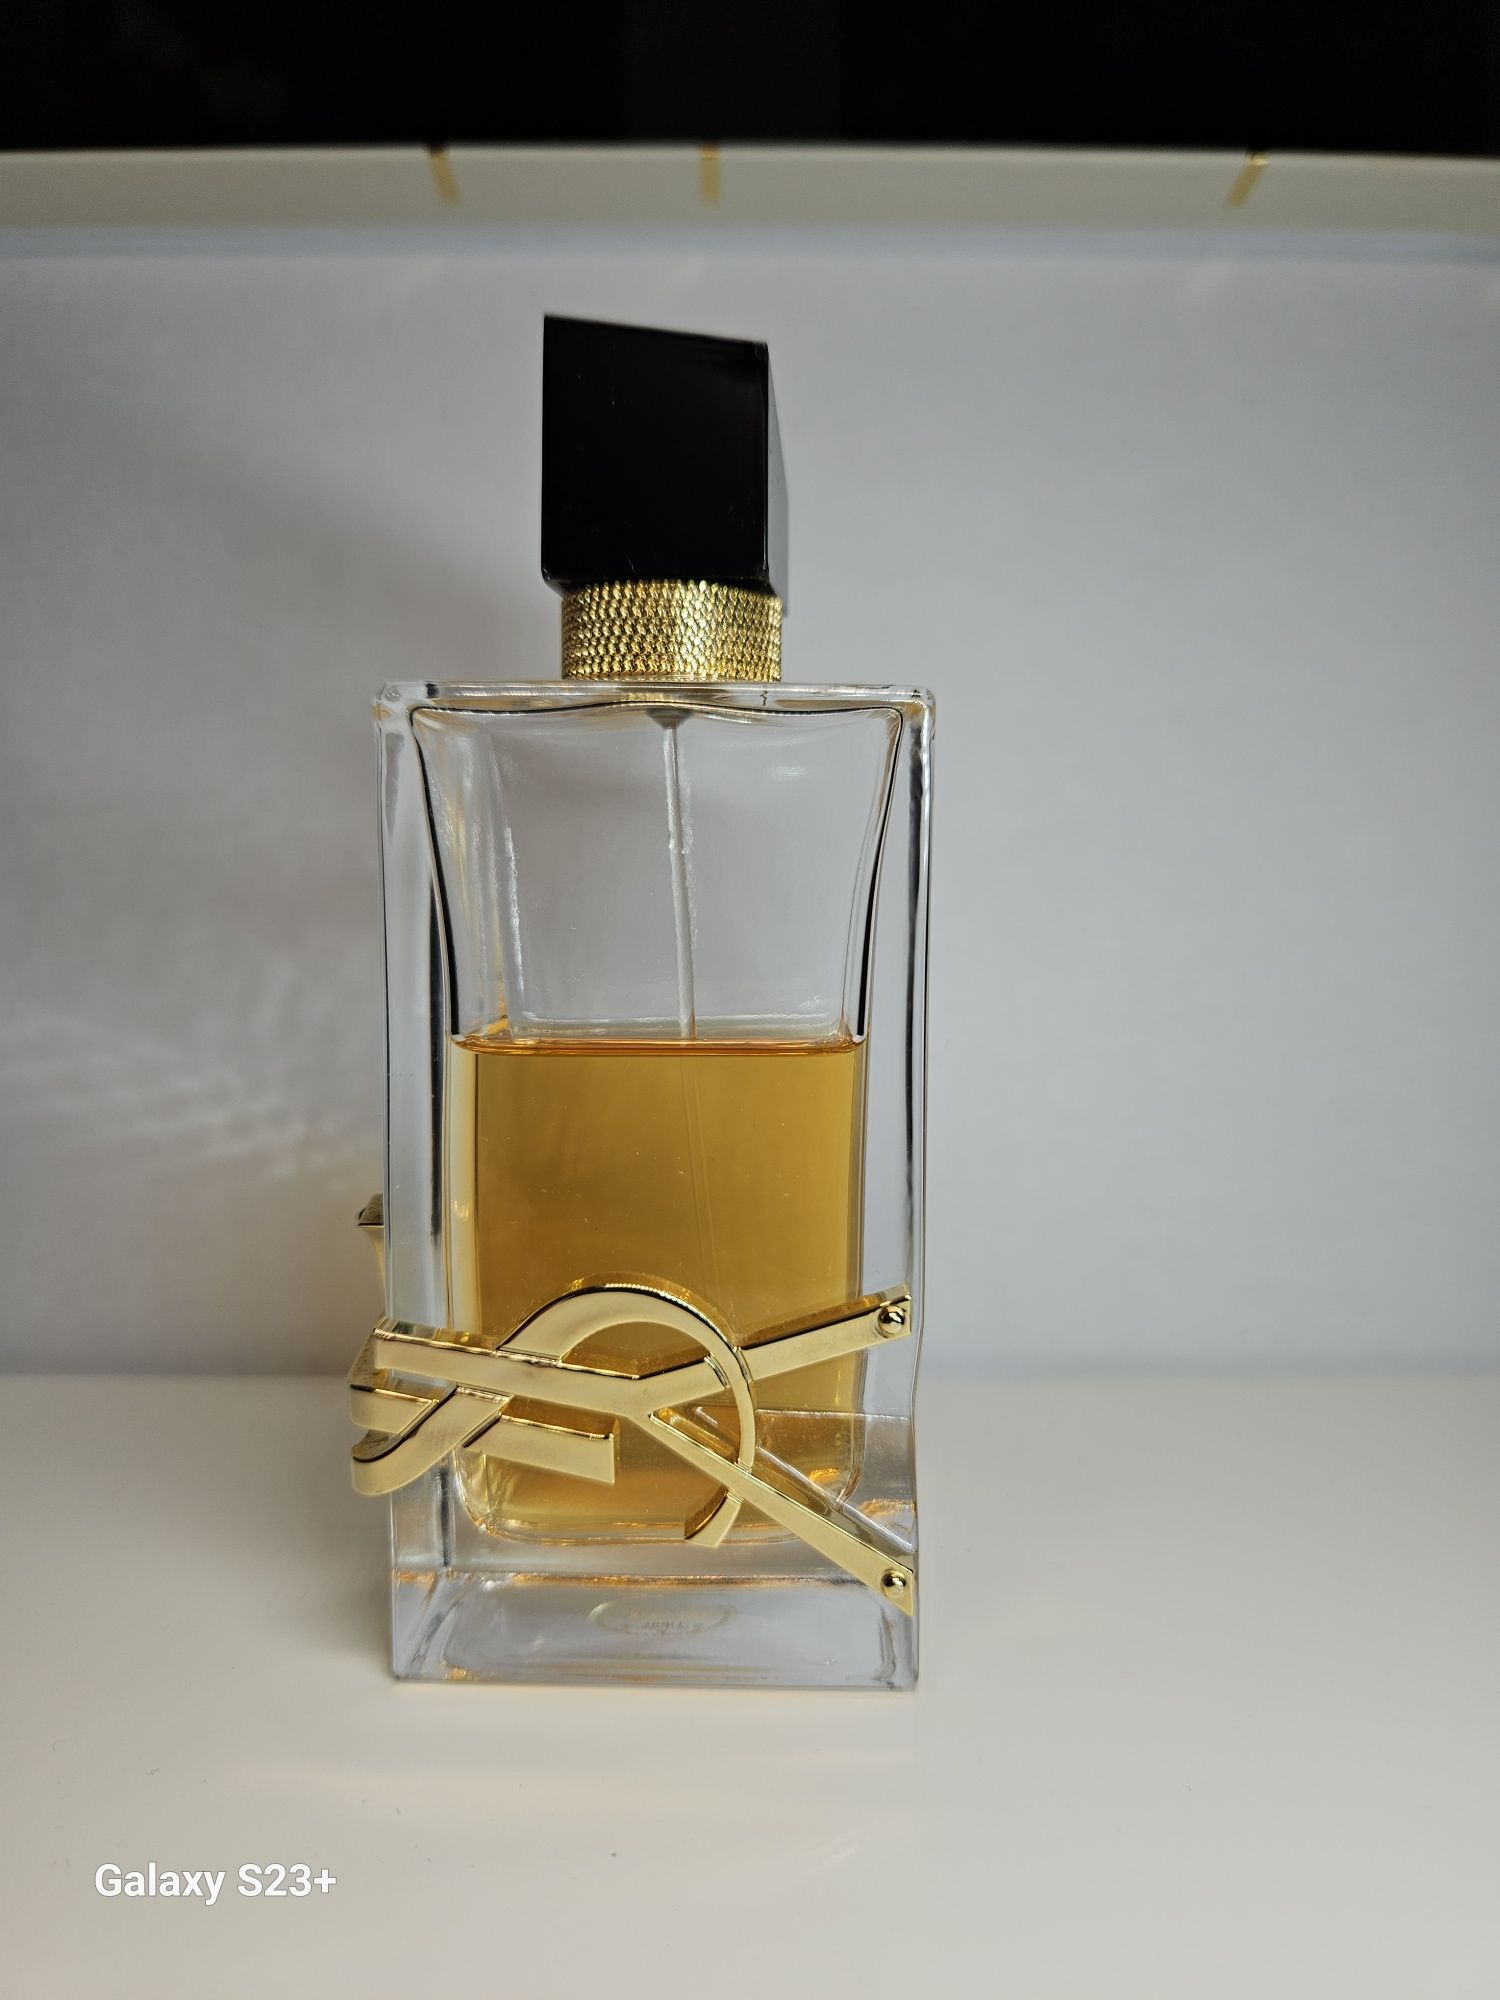 Perfumy LIBRE Yves Saint Laurent 90ml. Zostało 50-60ml